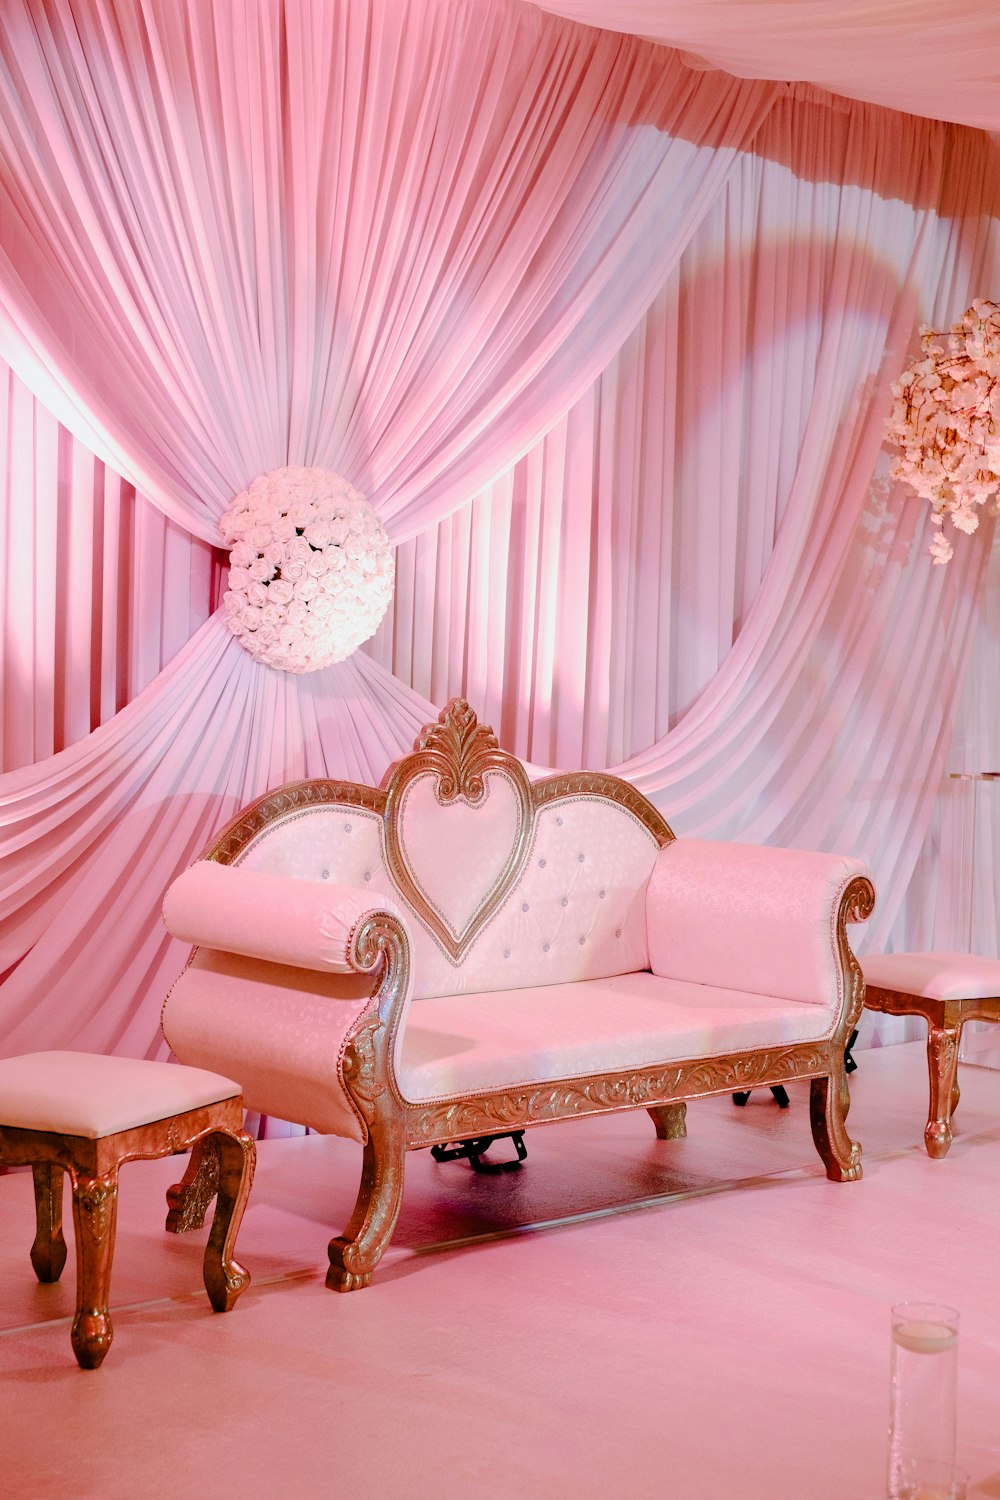 1000+ Wedding Decor Pictures | Download Free Images on Unsplash